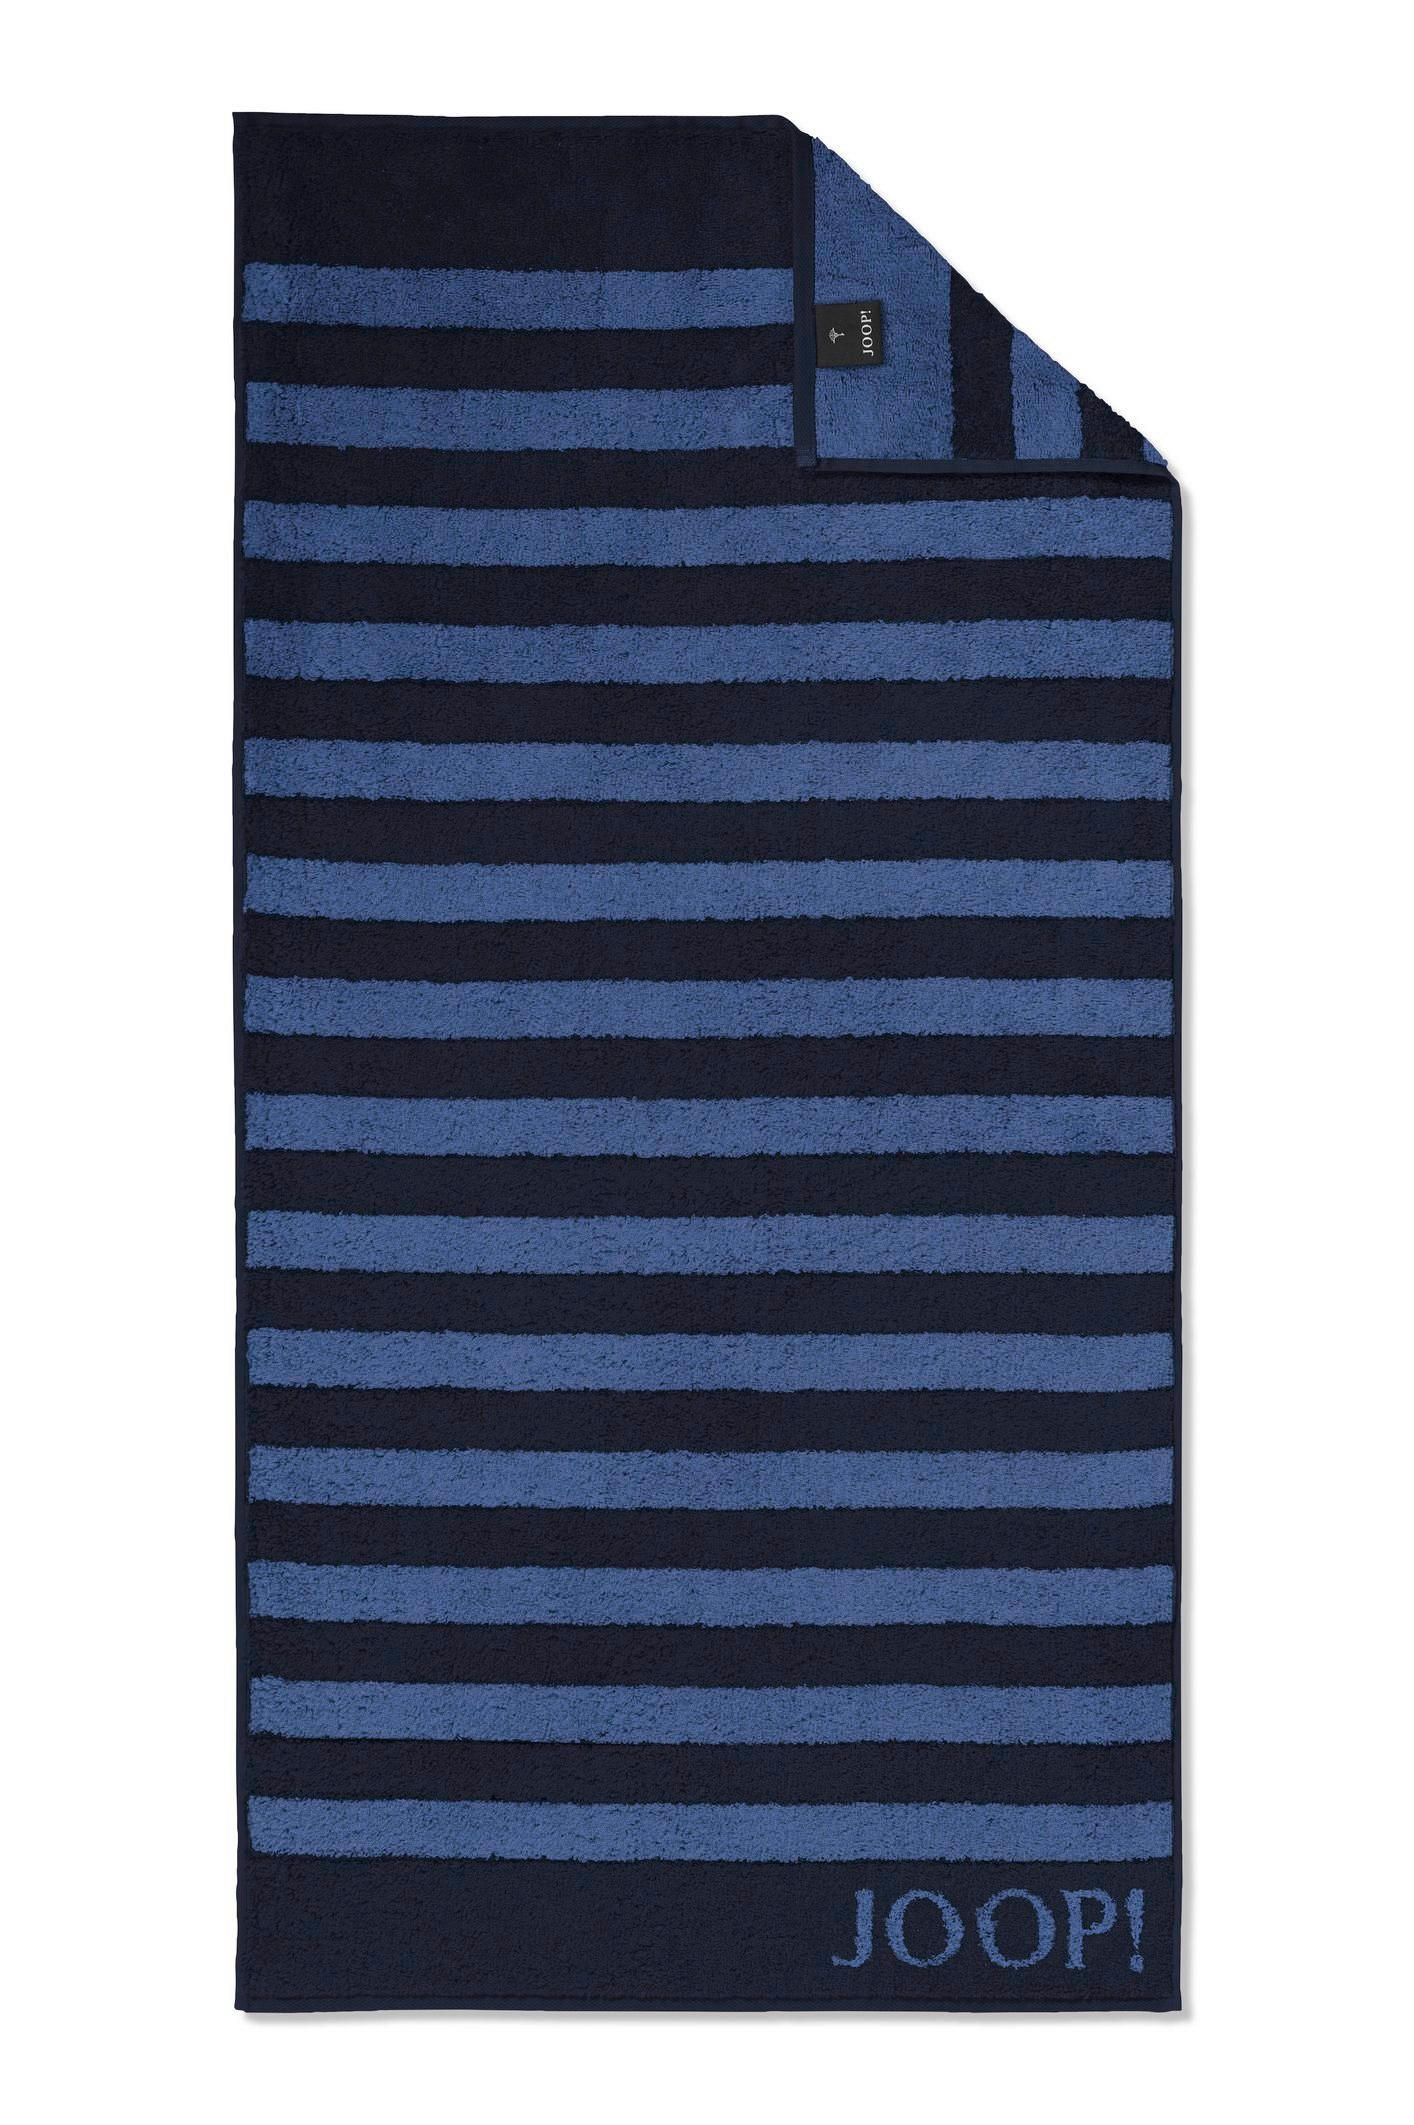 SAUNATUCH Classic Stripes  - Blau/Dunkelblau, Basics, Textil (80/200cm) - Joop!